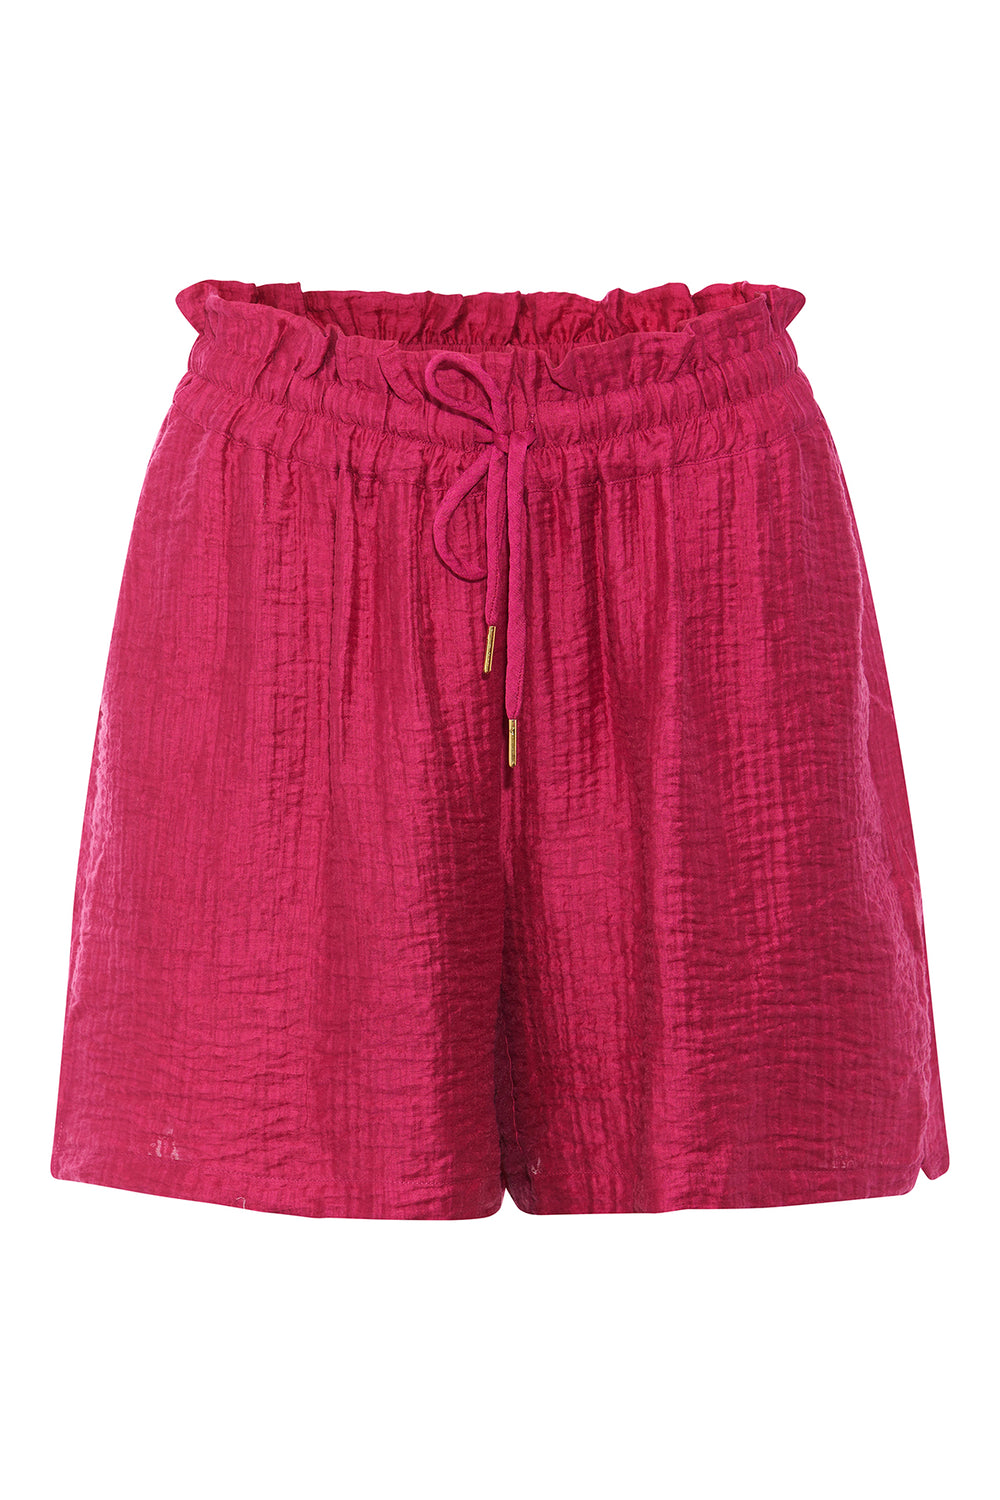 Rue de Femme Elara shorts SHORTS 356 Raspberry sorbet